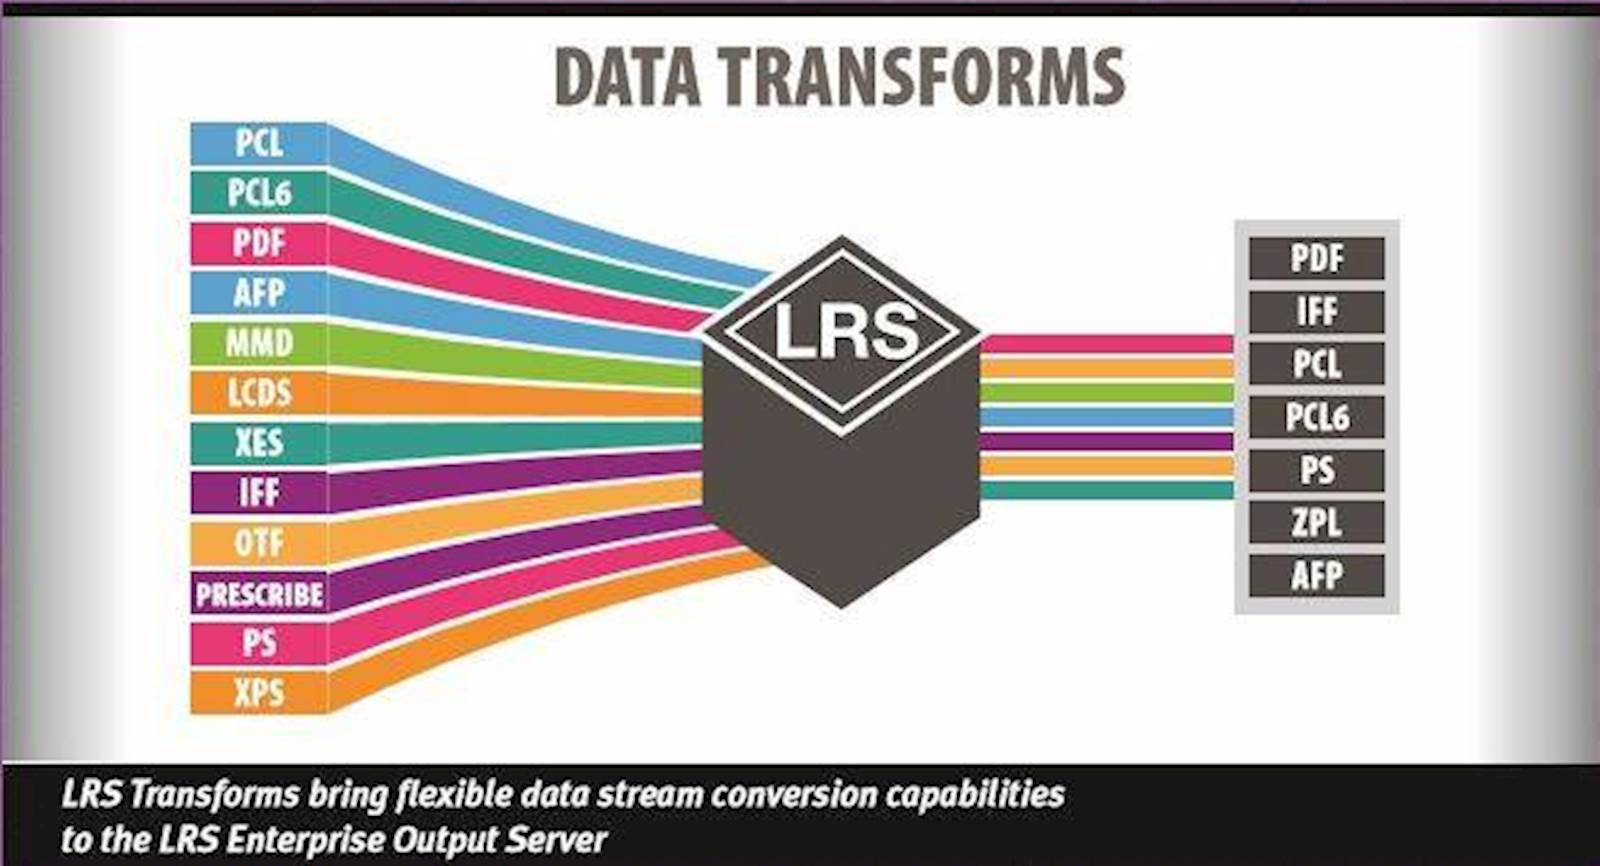 LRS Data Transforms for data stream conversion